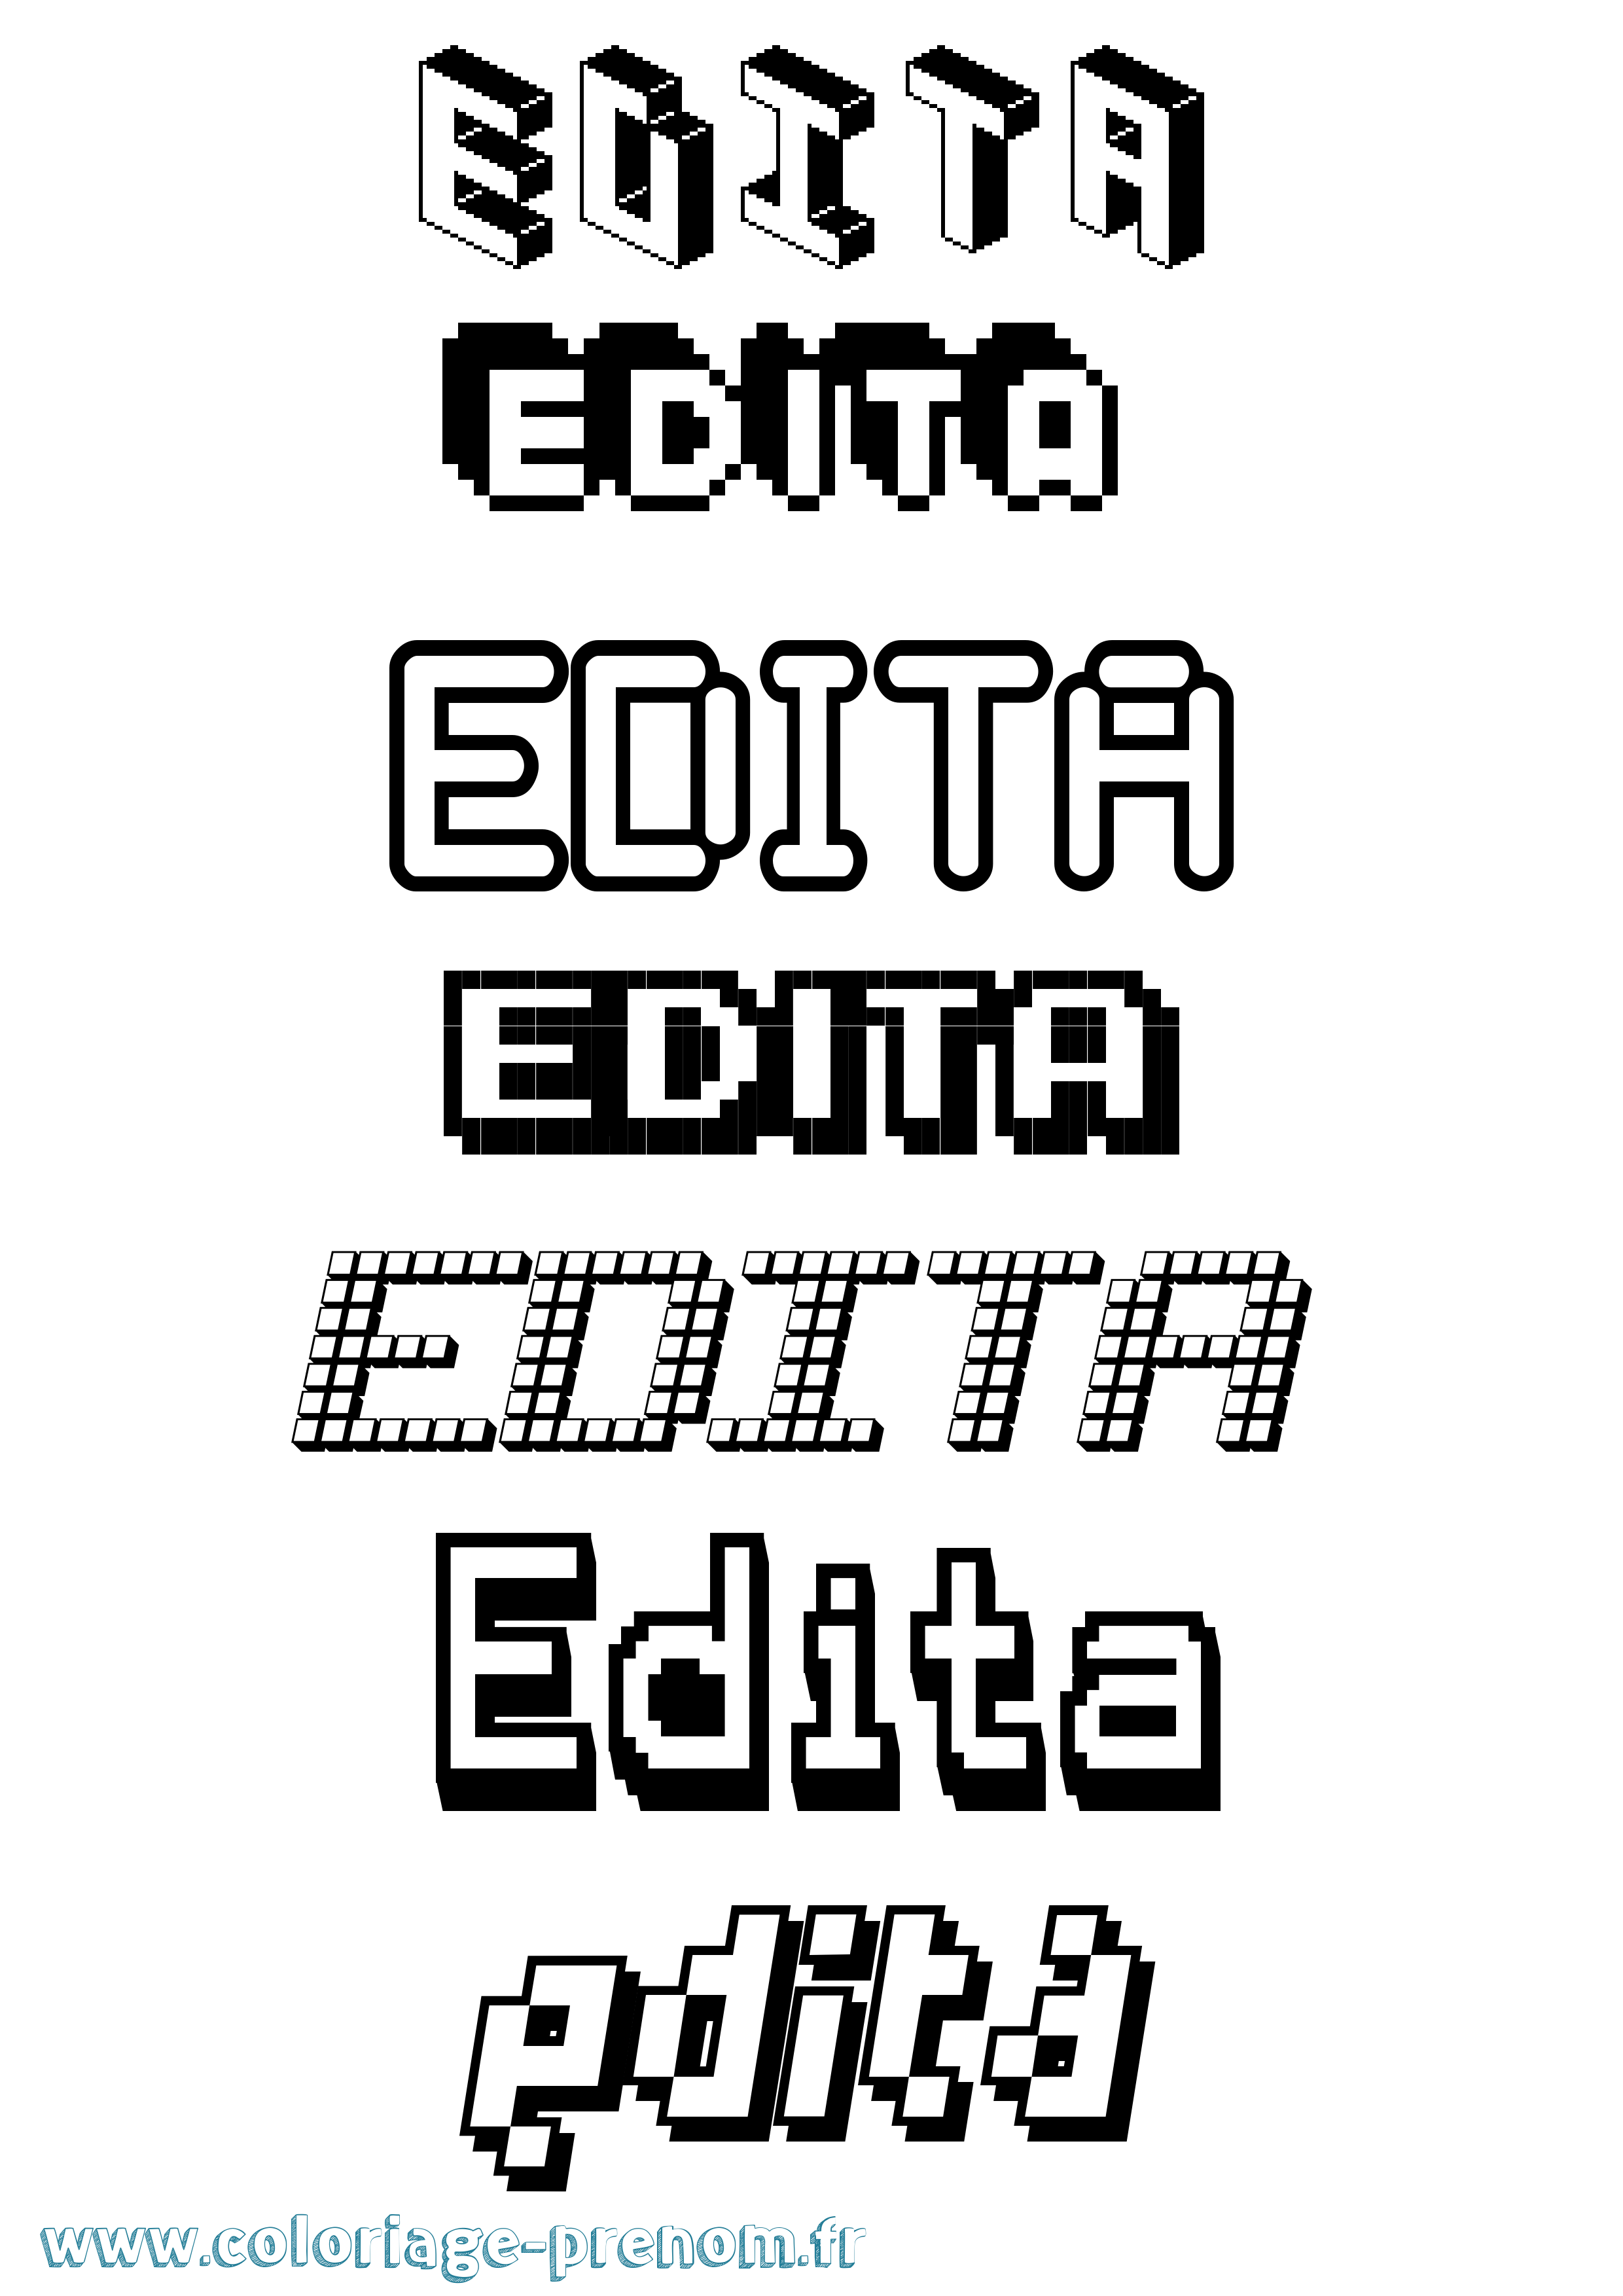 Coloriage prénom Edita Pixel